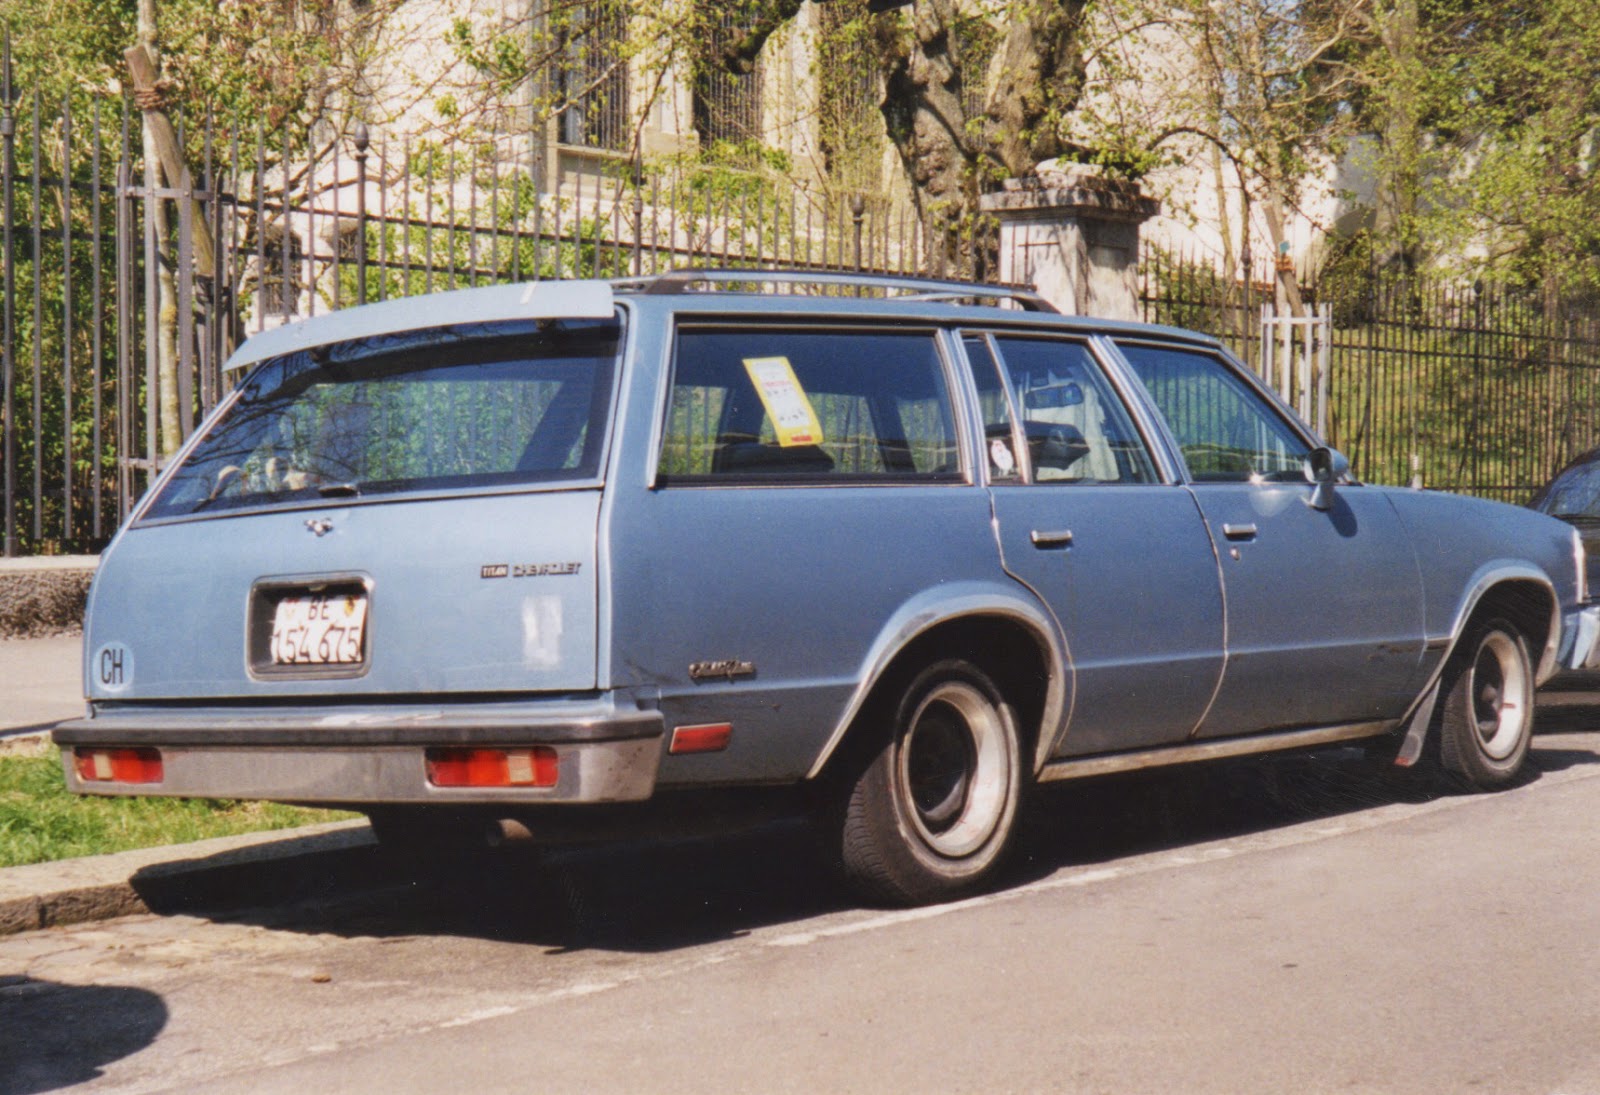 32-%252811%2529-Chevrolet-Malibu-Station-Wagon-Import-1978-1983-Rear.jpeg